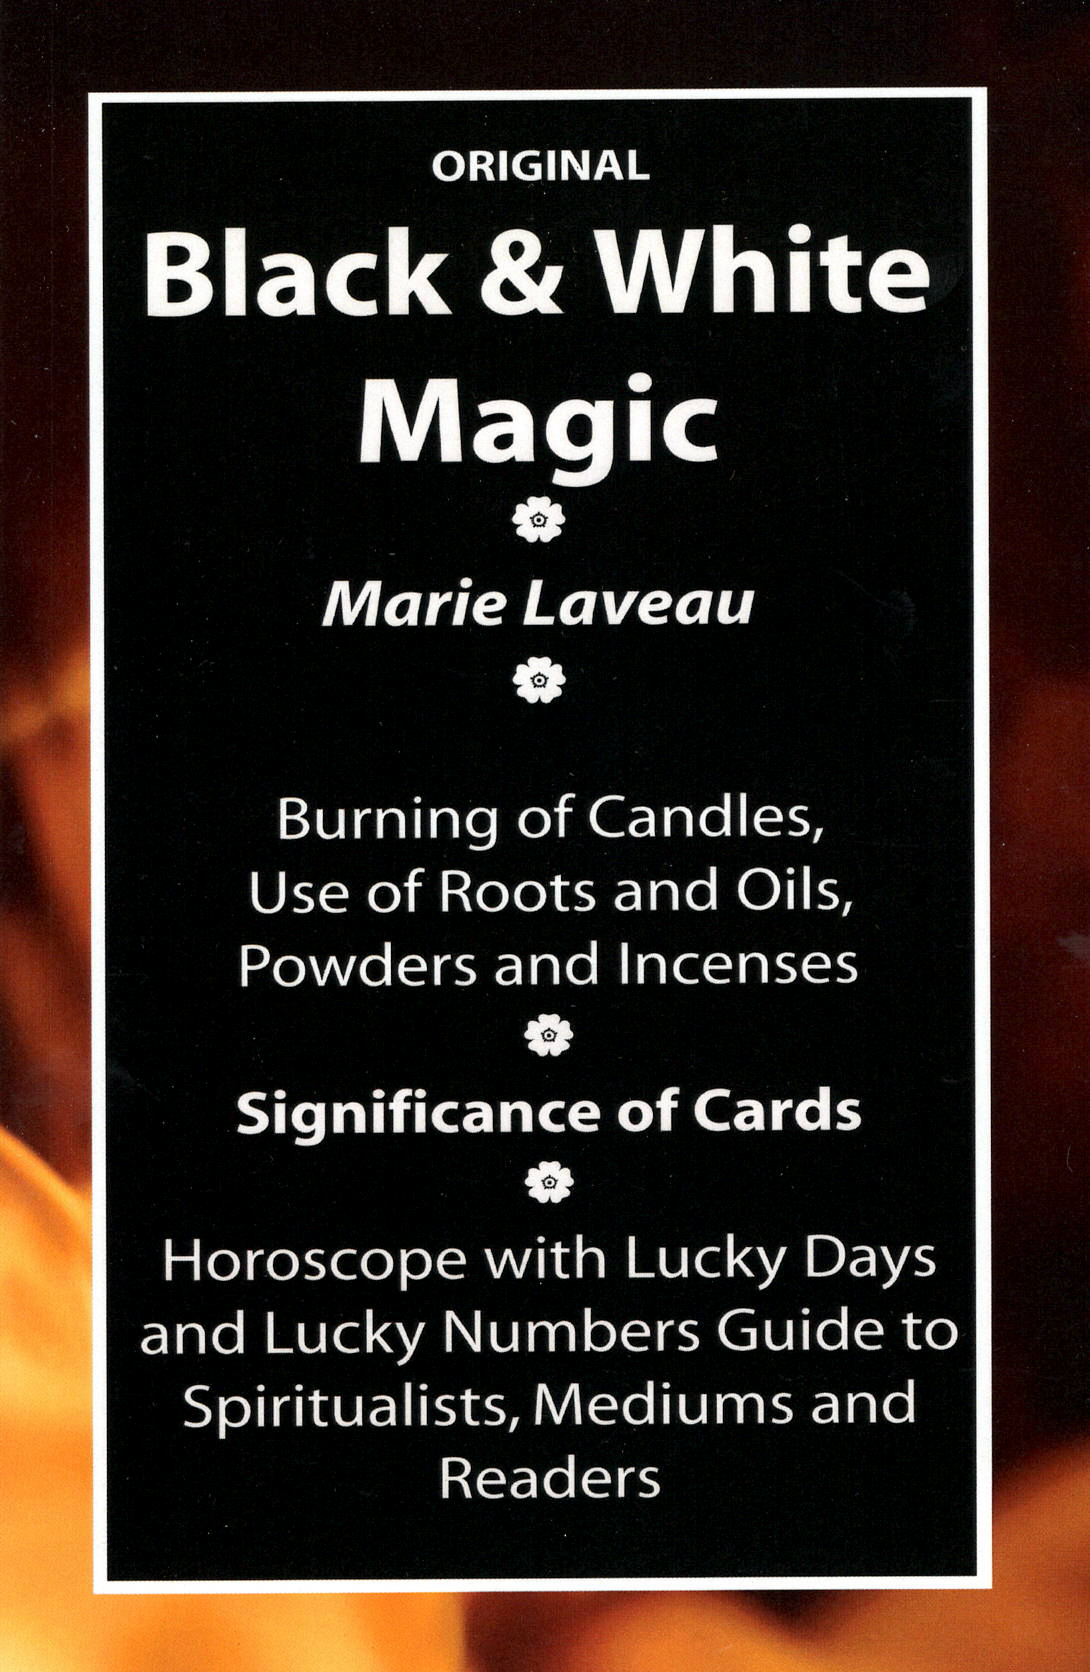 Black & White Magic, by Marie Laveau